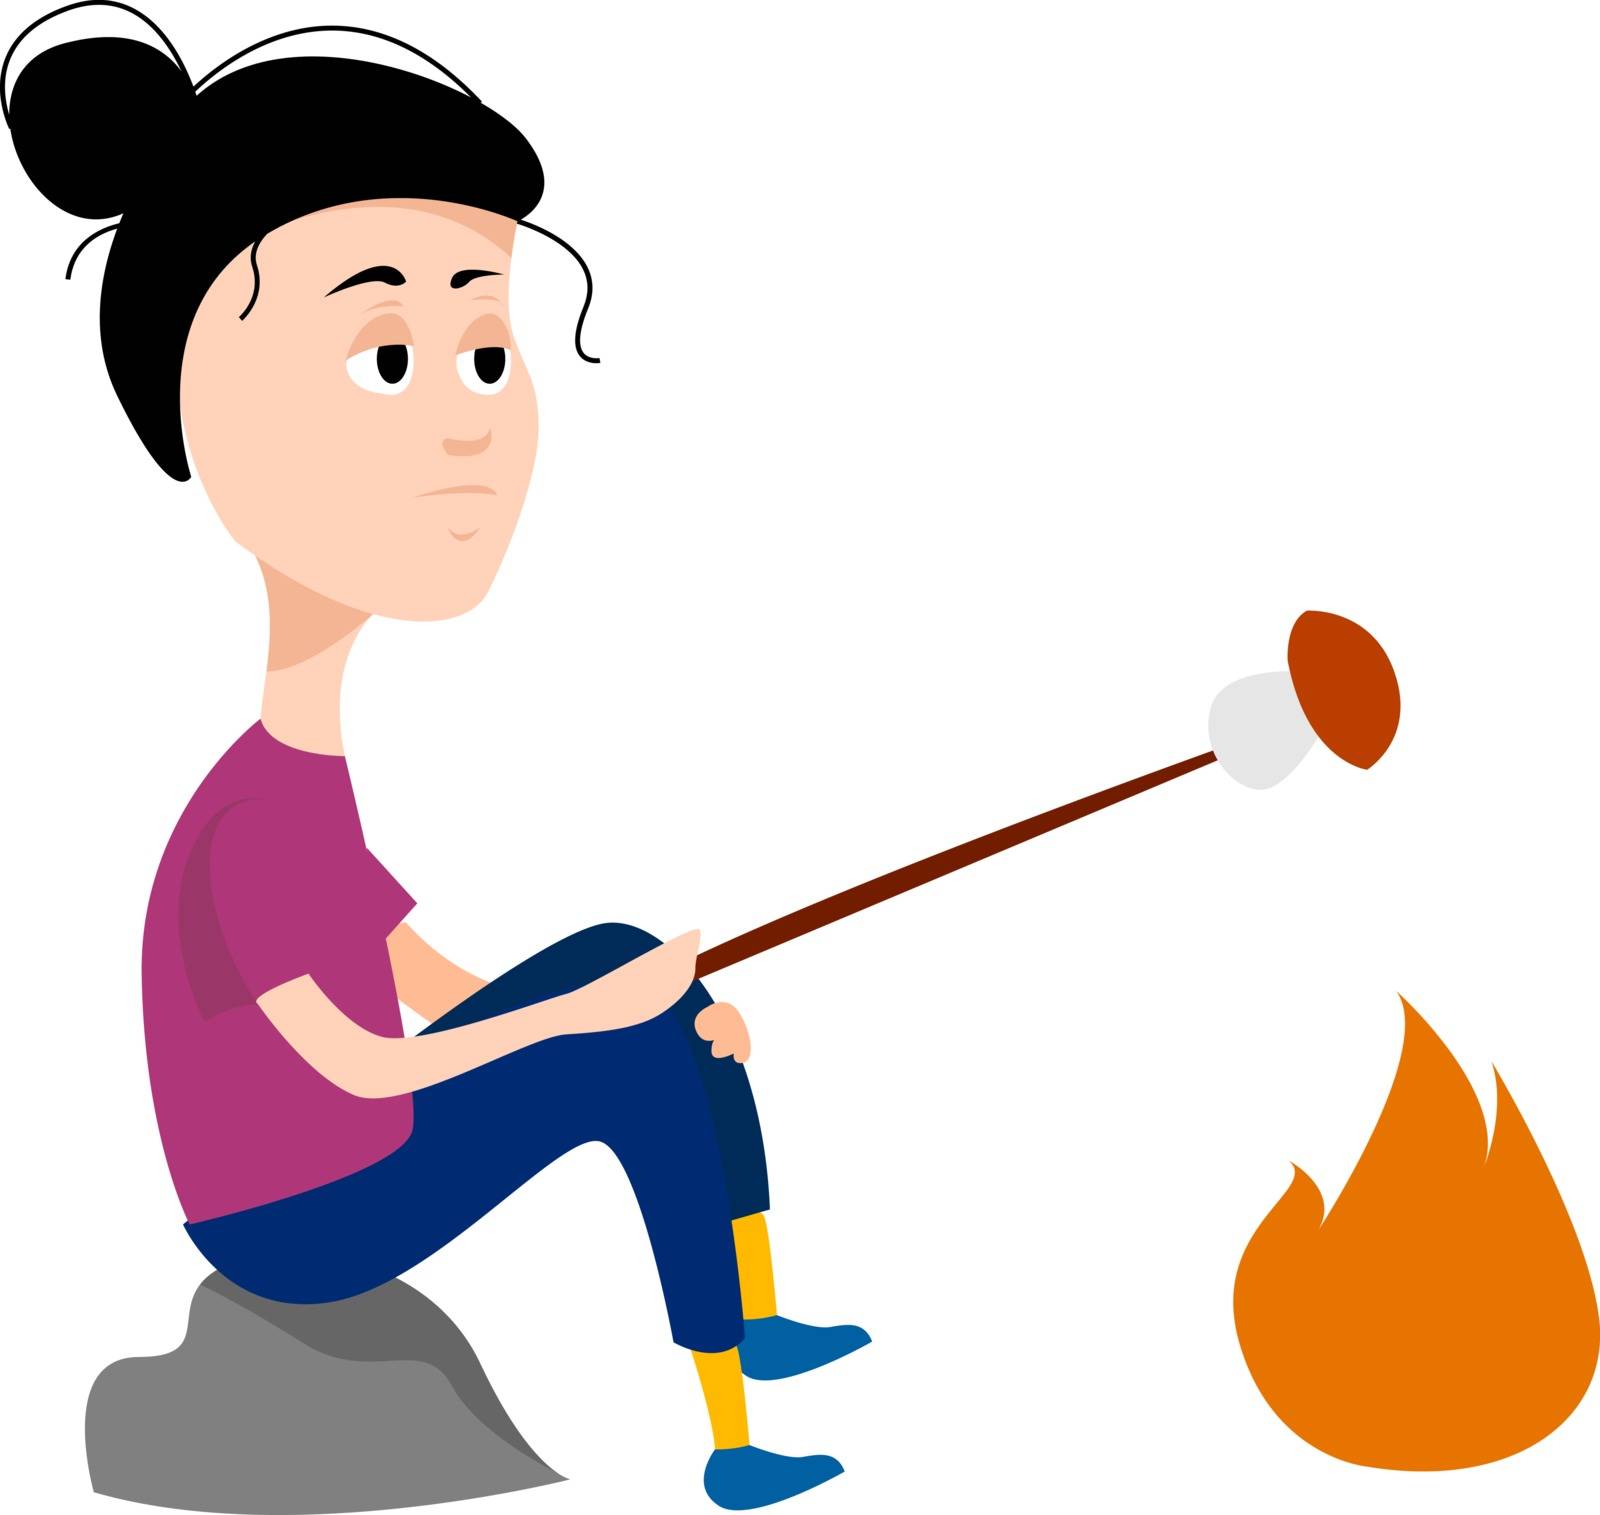 Girl on campfire, illustration, vector on white background. by Morphart